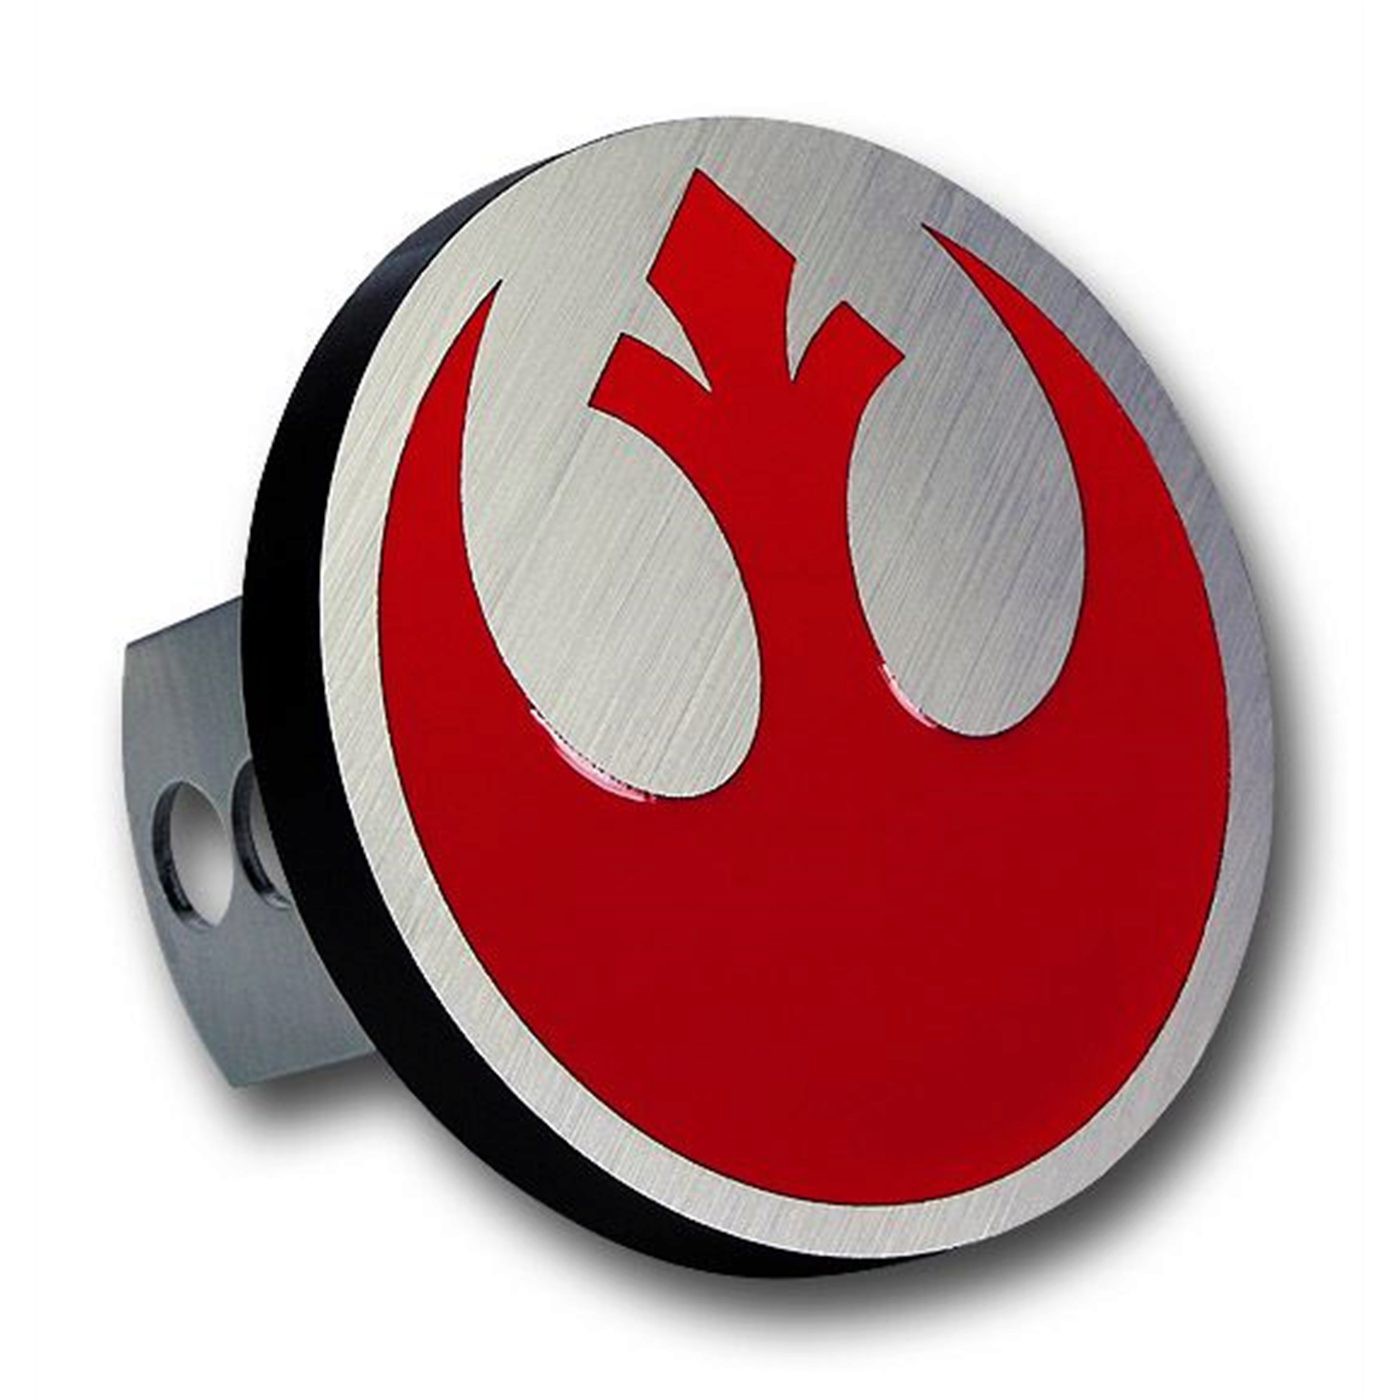 Star Wars Rebel Symbol Trailer Hitch Plug